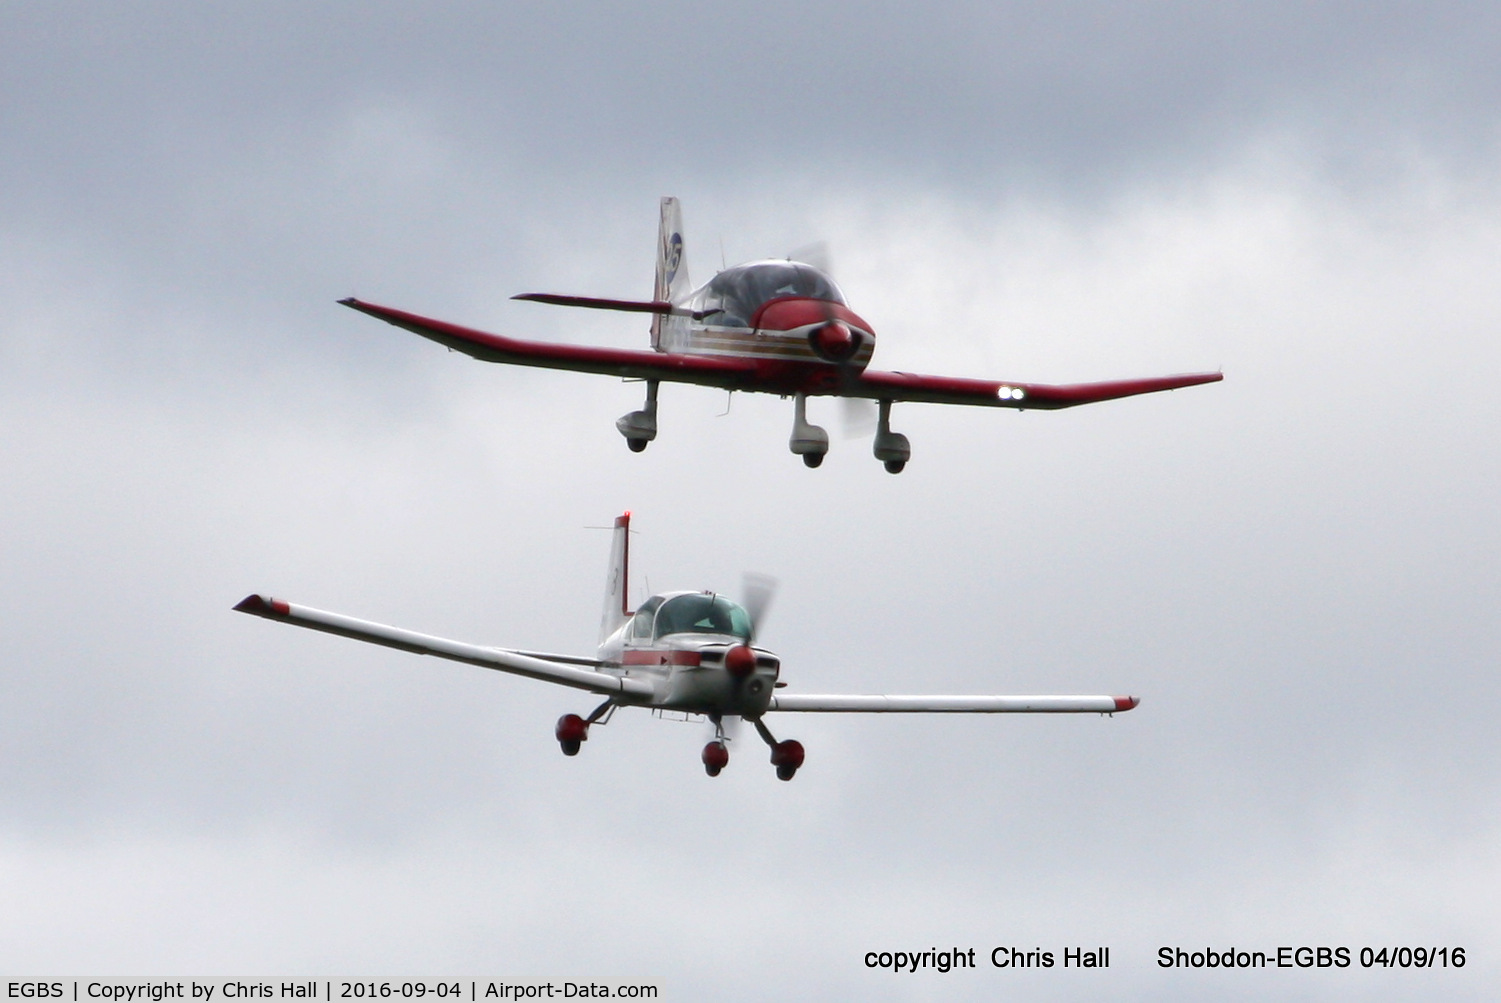 Shobdon Aerodrome Airport, Leominster, England United Kingdom (EGBS) - Royal Aero Club RRRA air race at Shobdon